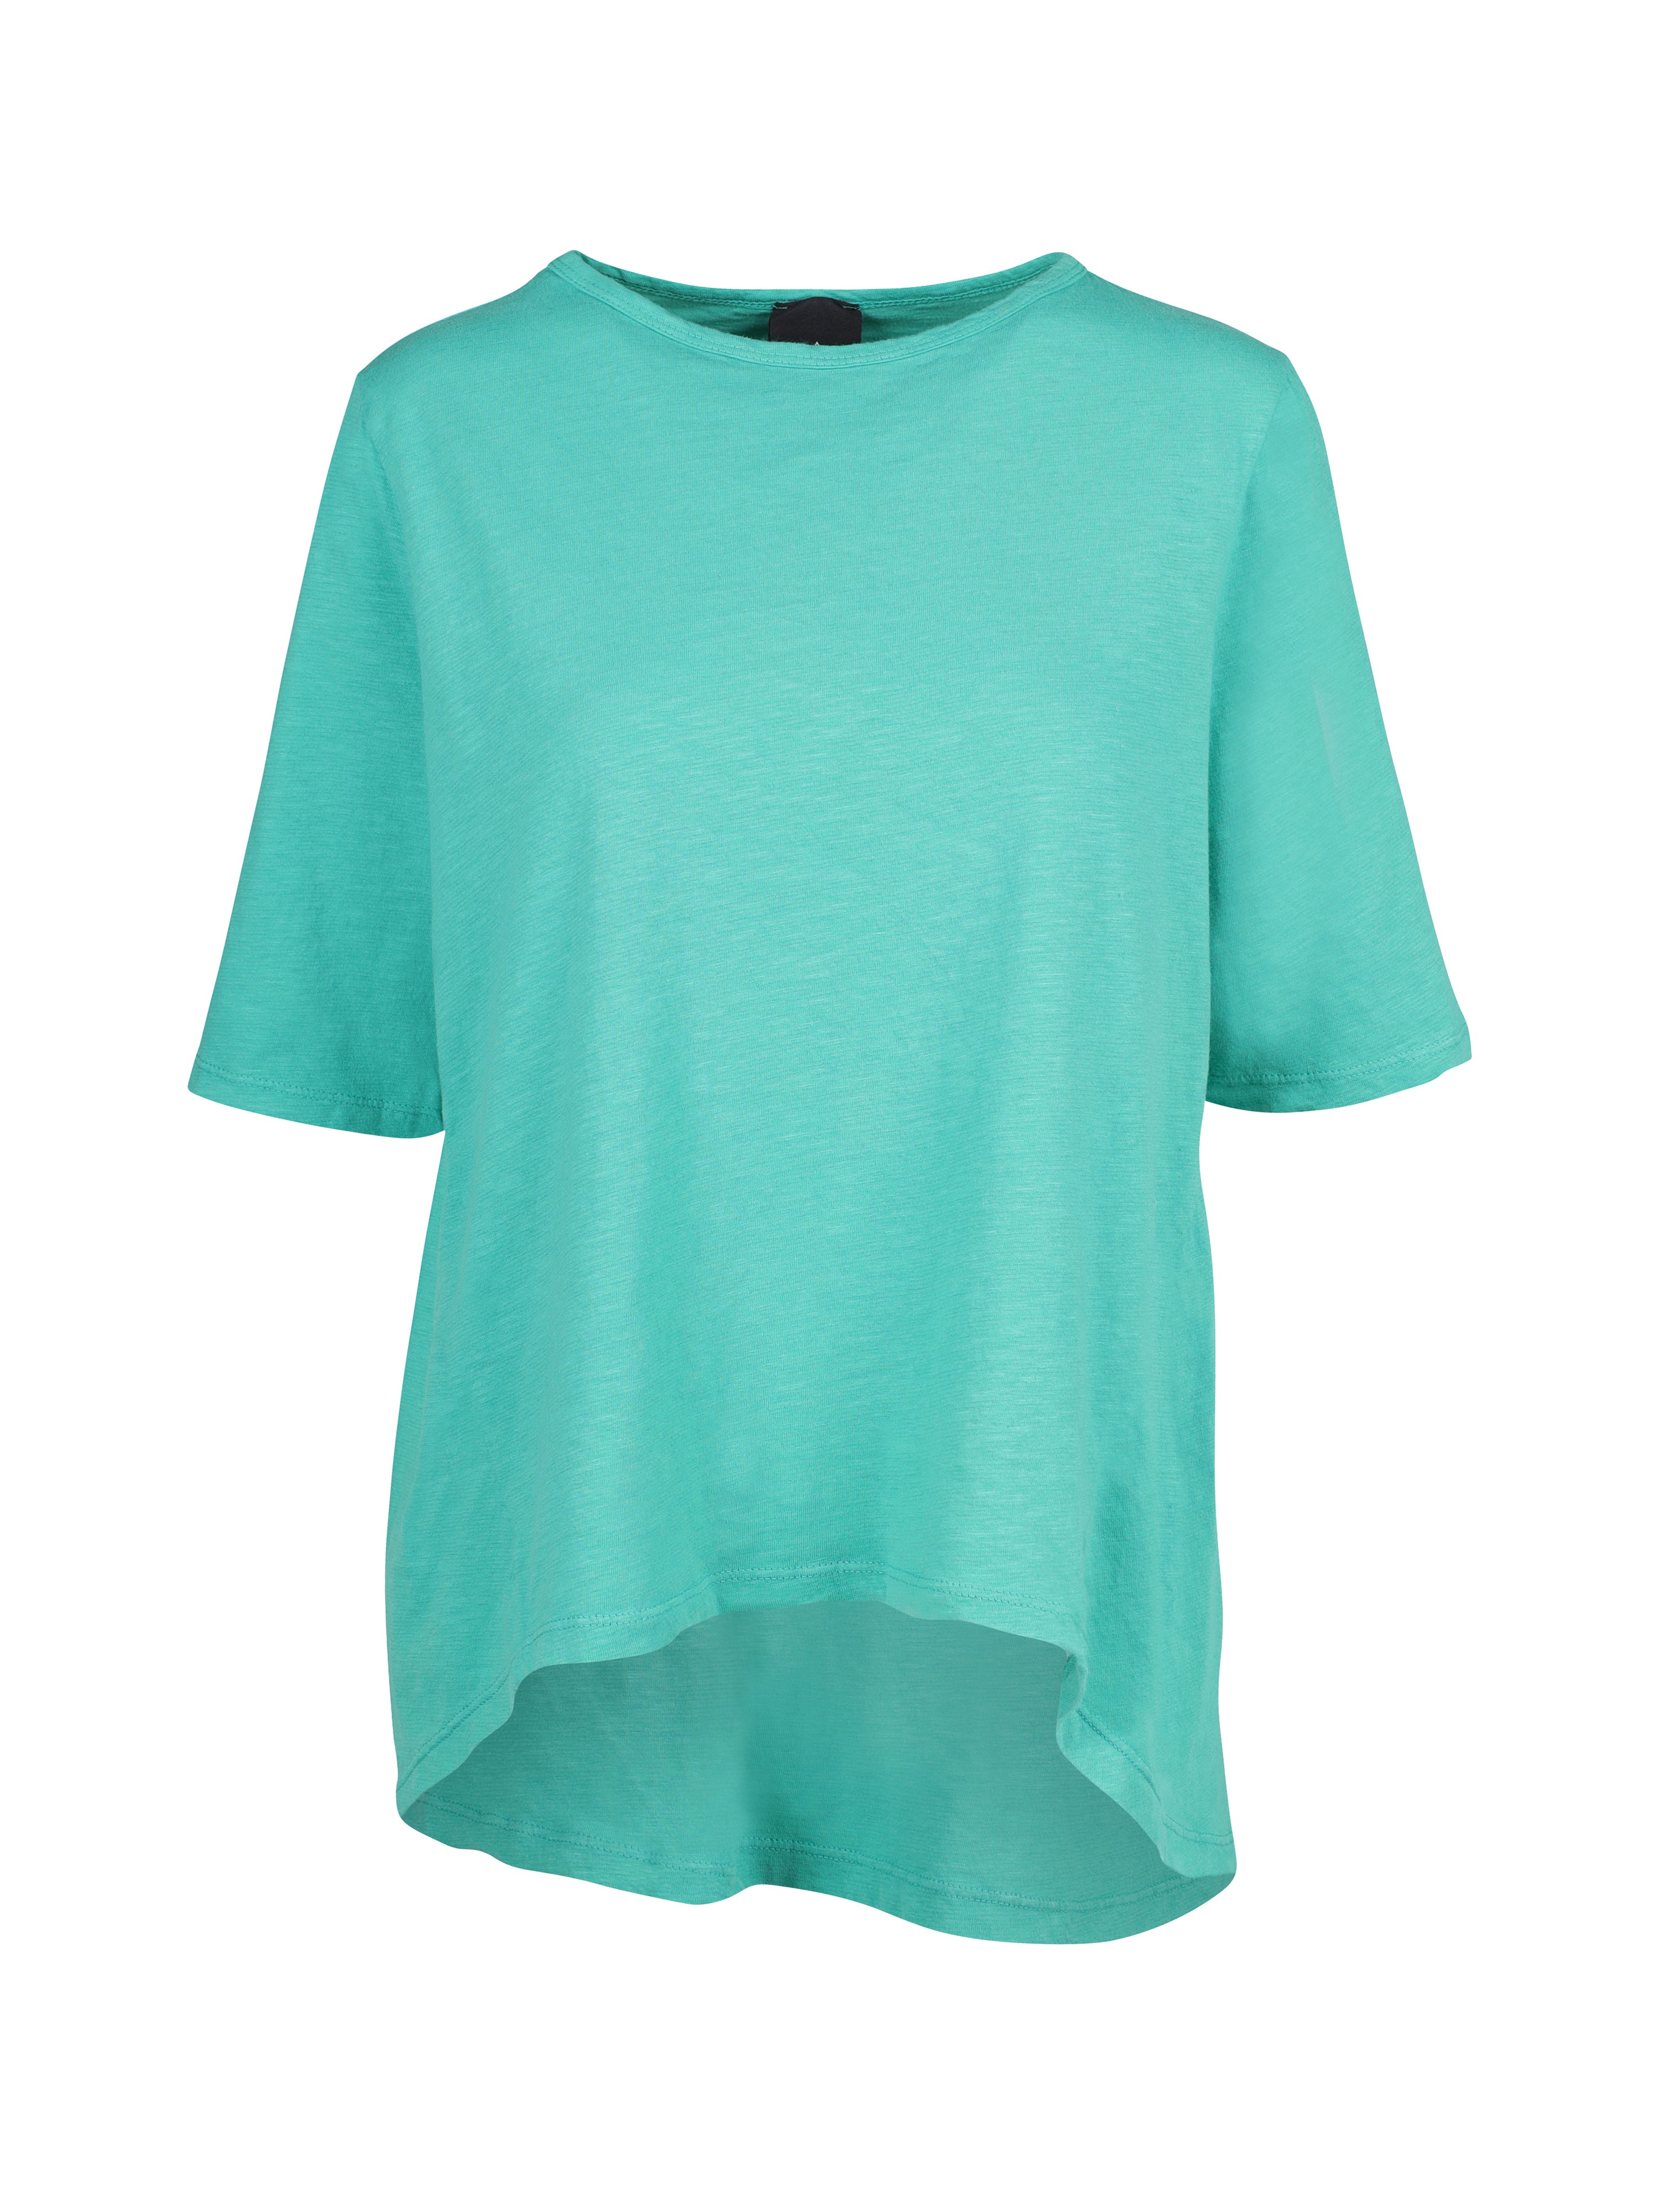 OAKLEE oversize t-shirt Simply Green Denmark -